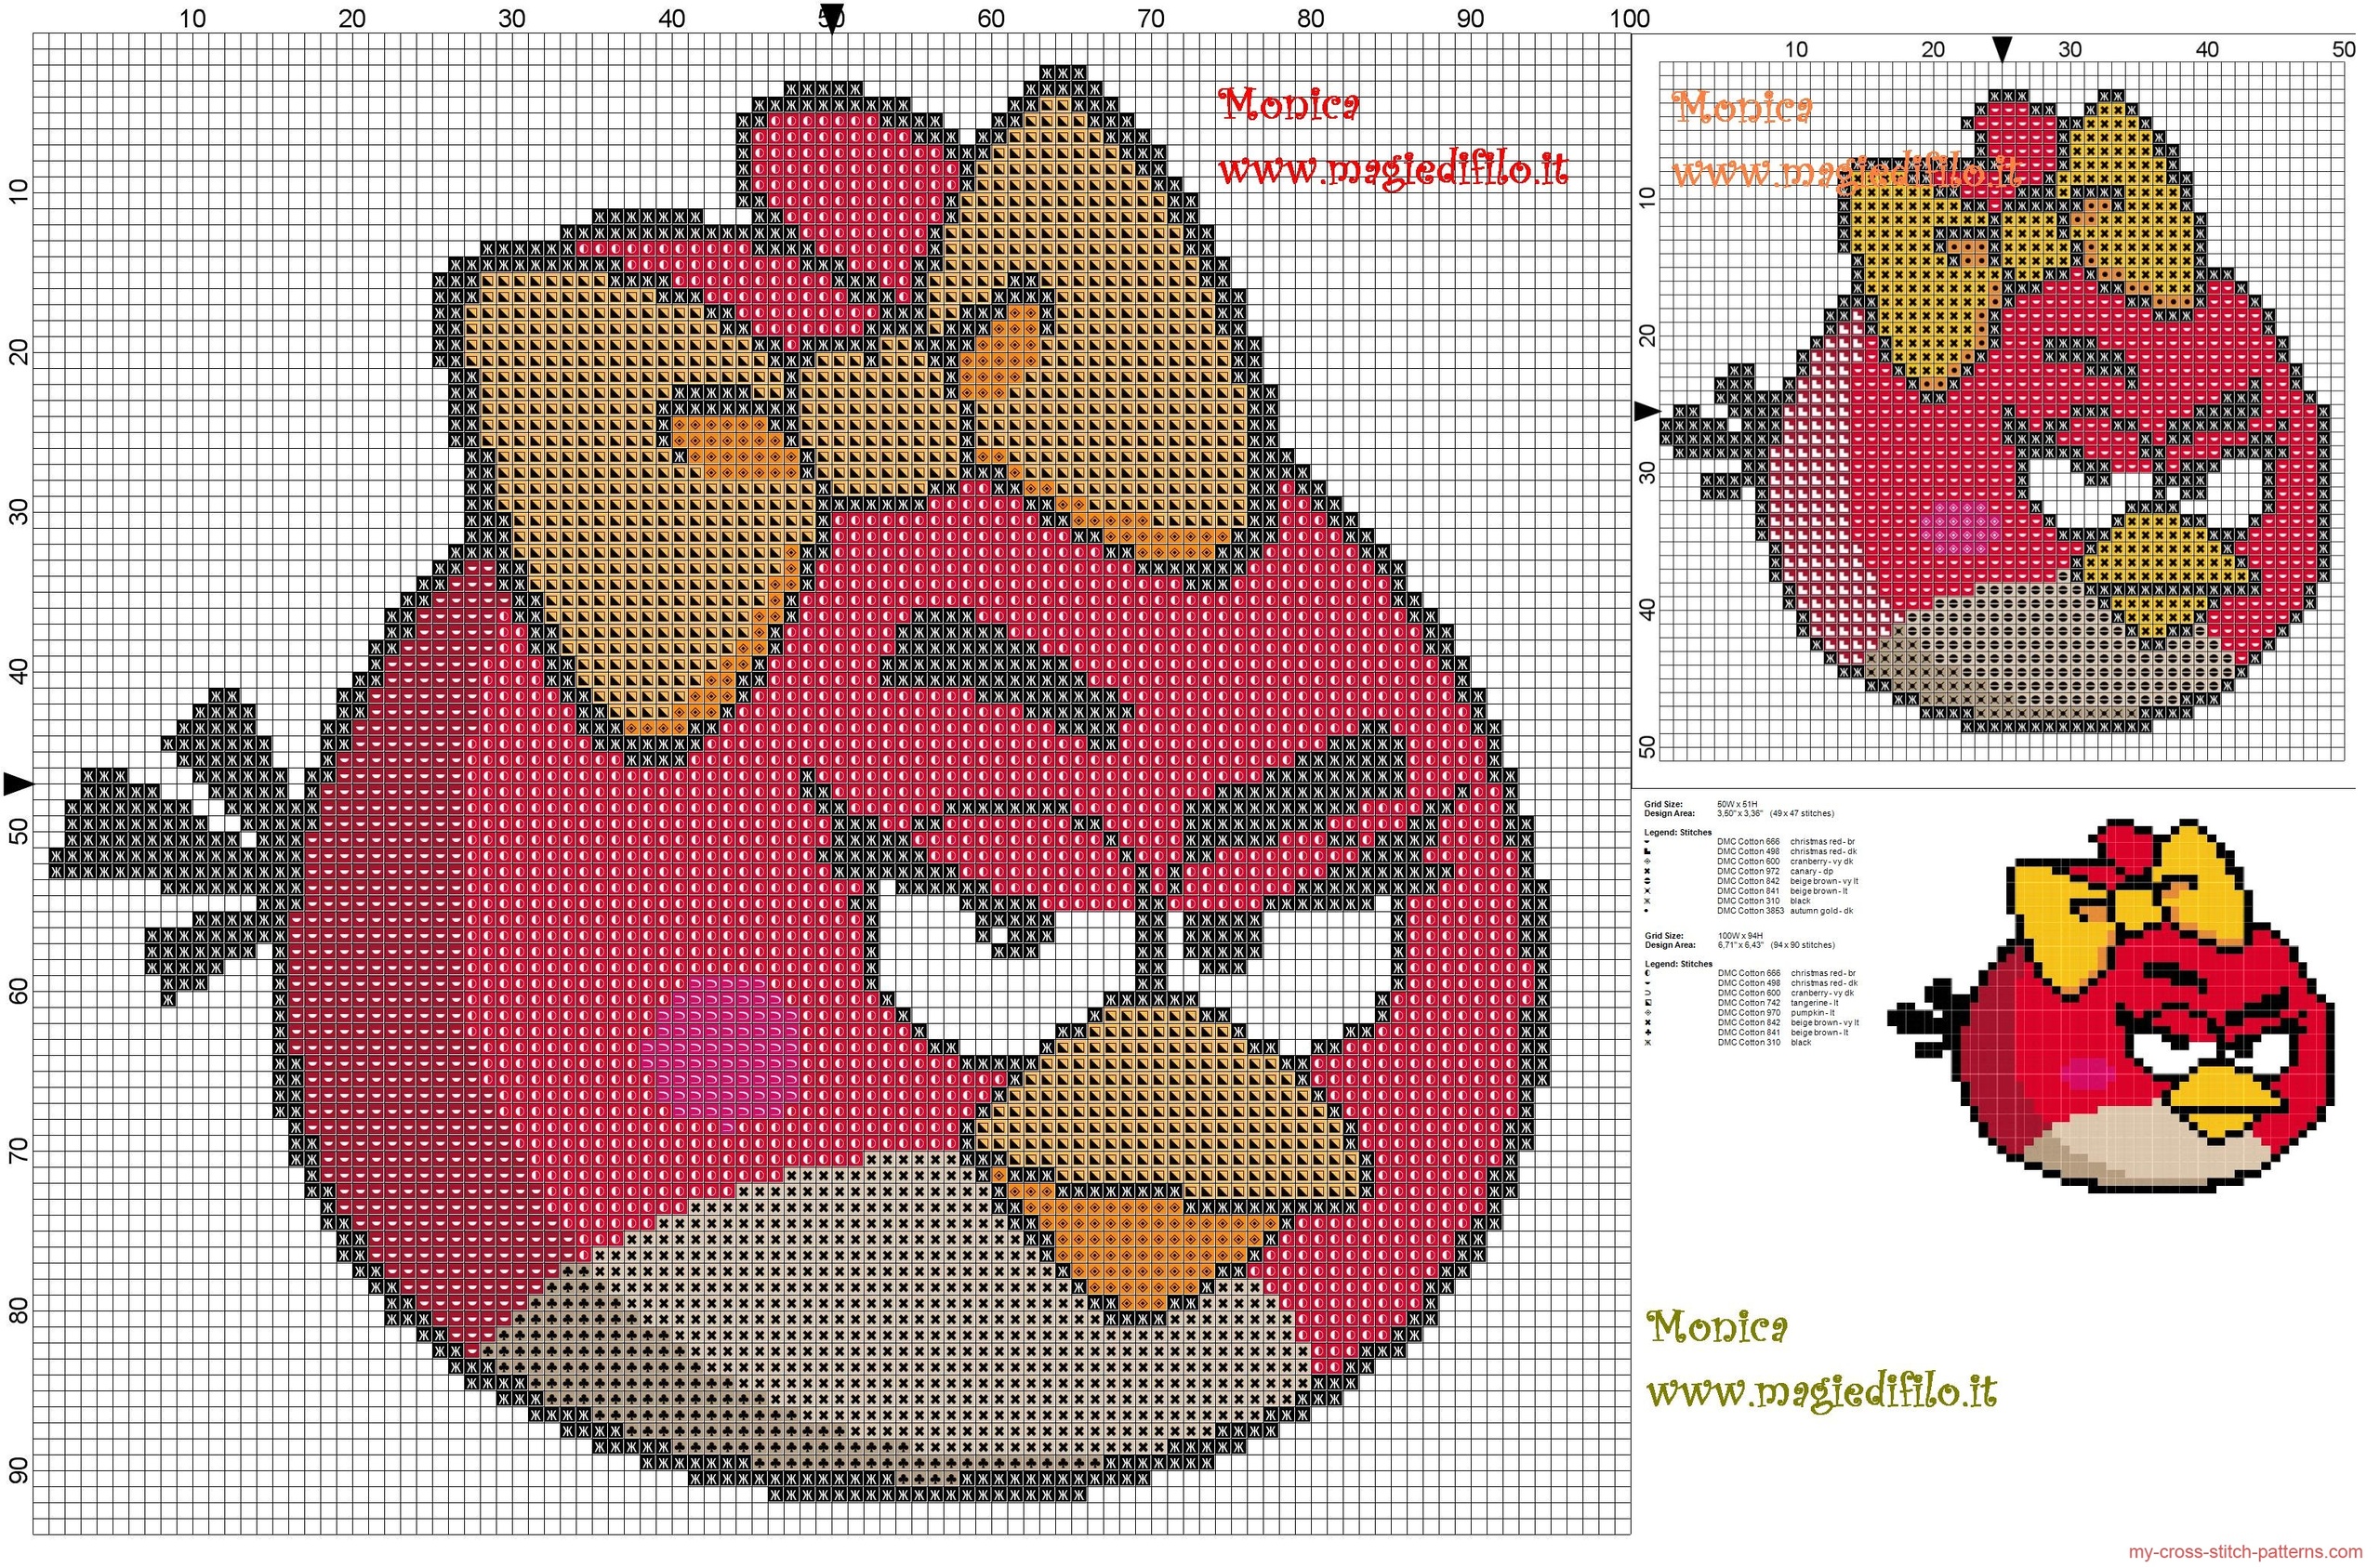 angry_birds_red_female_bird_cross_stitch_pattern